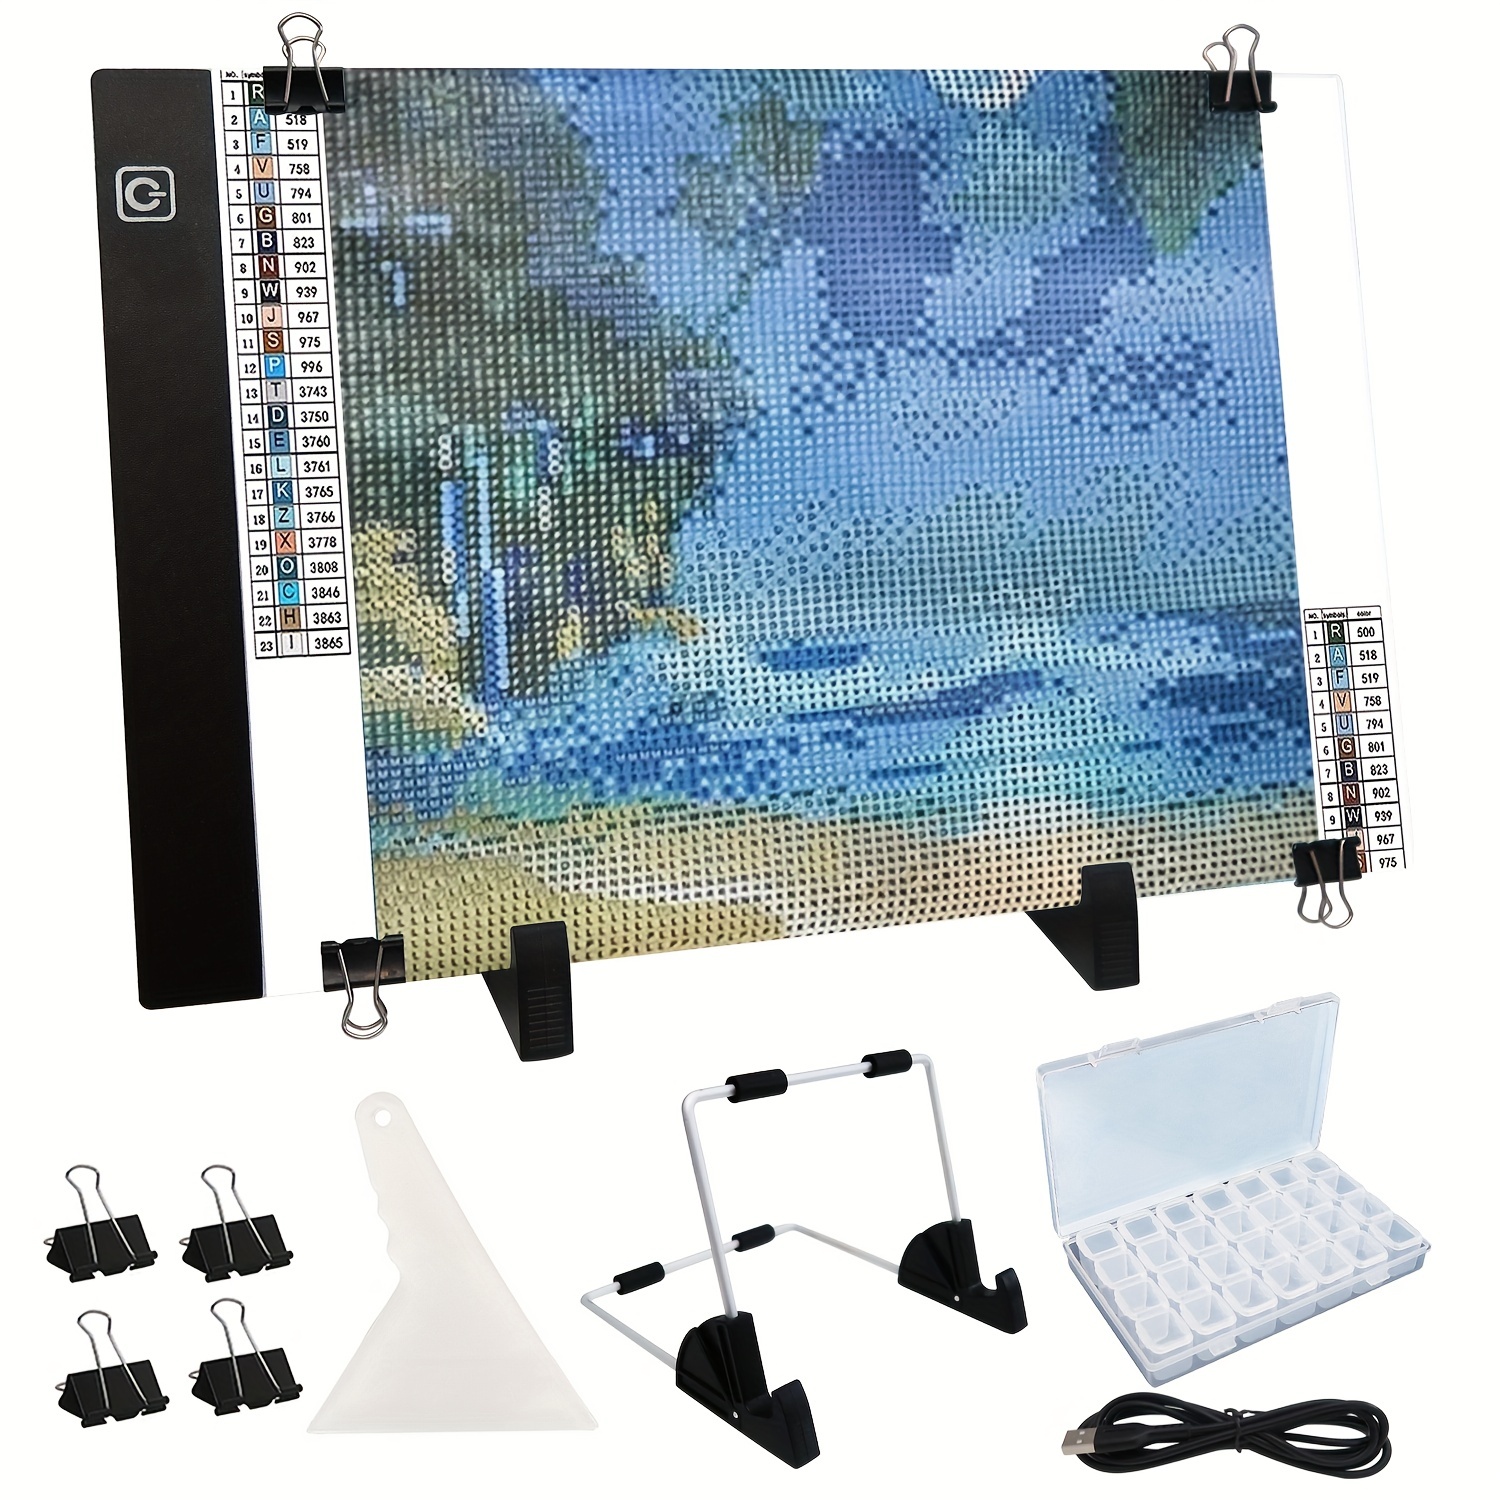 A4 A3 Led Light Board For Diy Diamond Painting Kits Usb - Temu